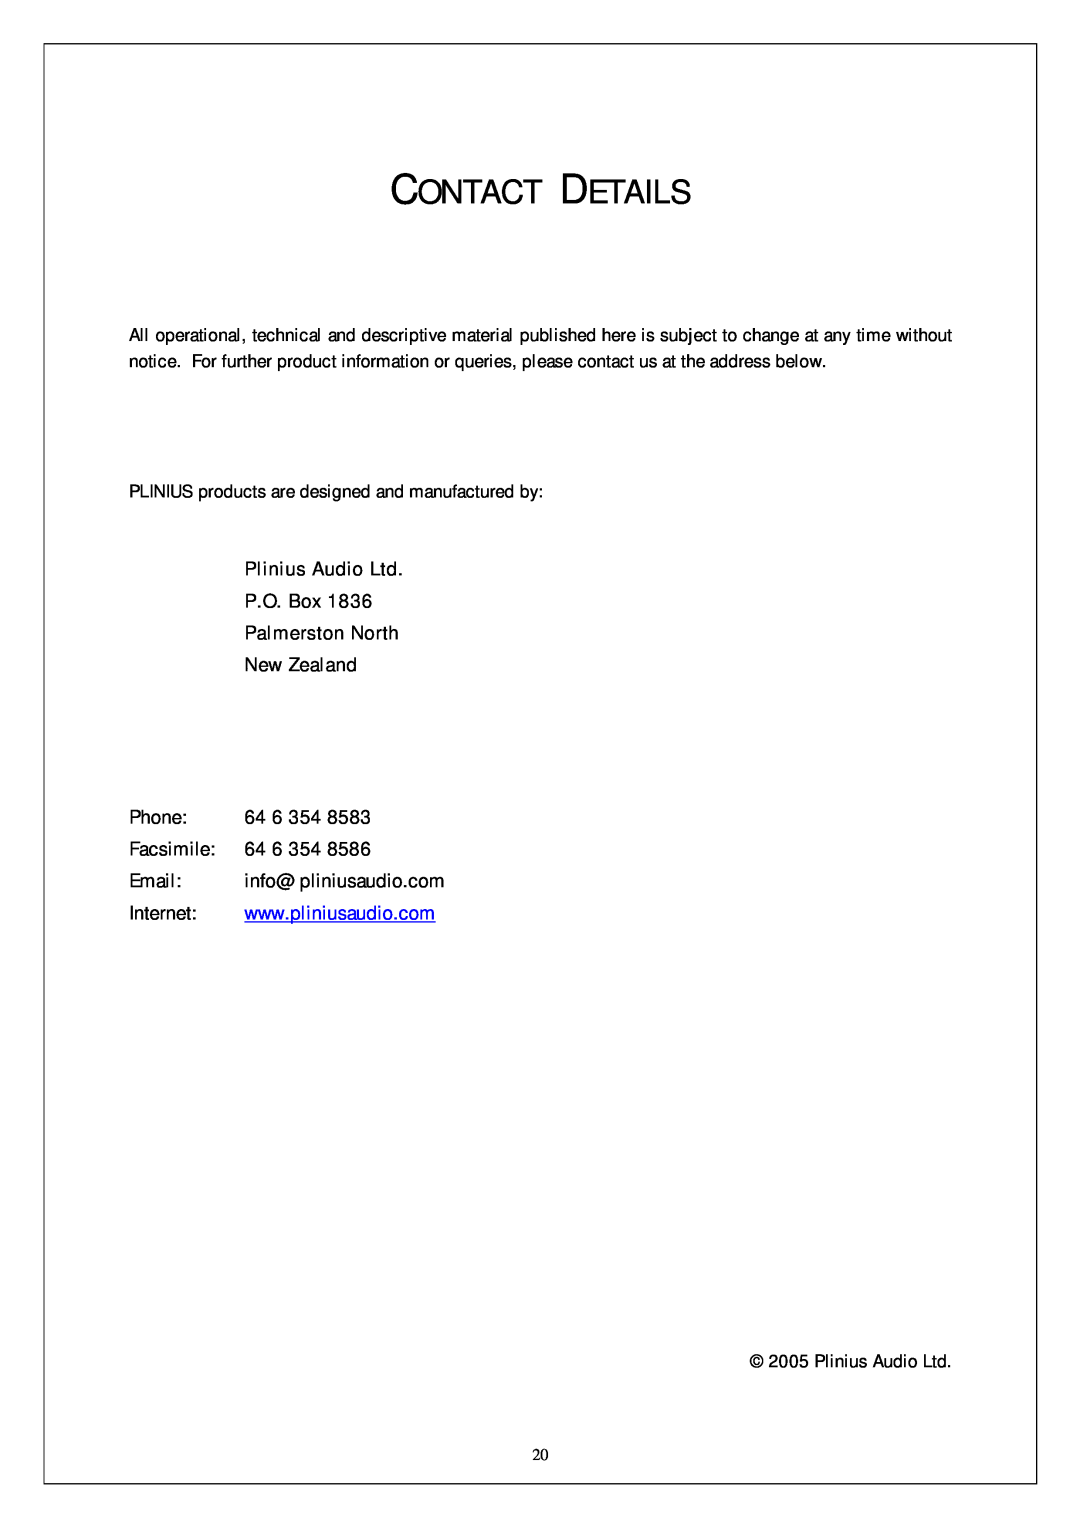 Plinius Audio SB-301 Contact Details, P.O. Box Palmerston North New Zealand, Phone, 64 6 354, Facsimile, Email, Internet 